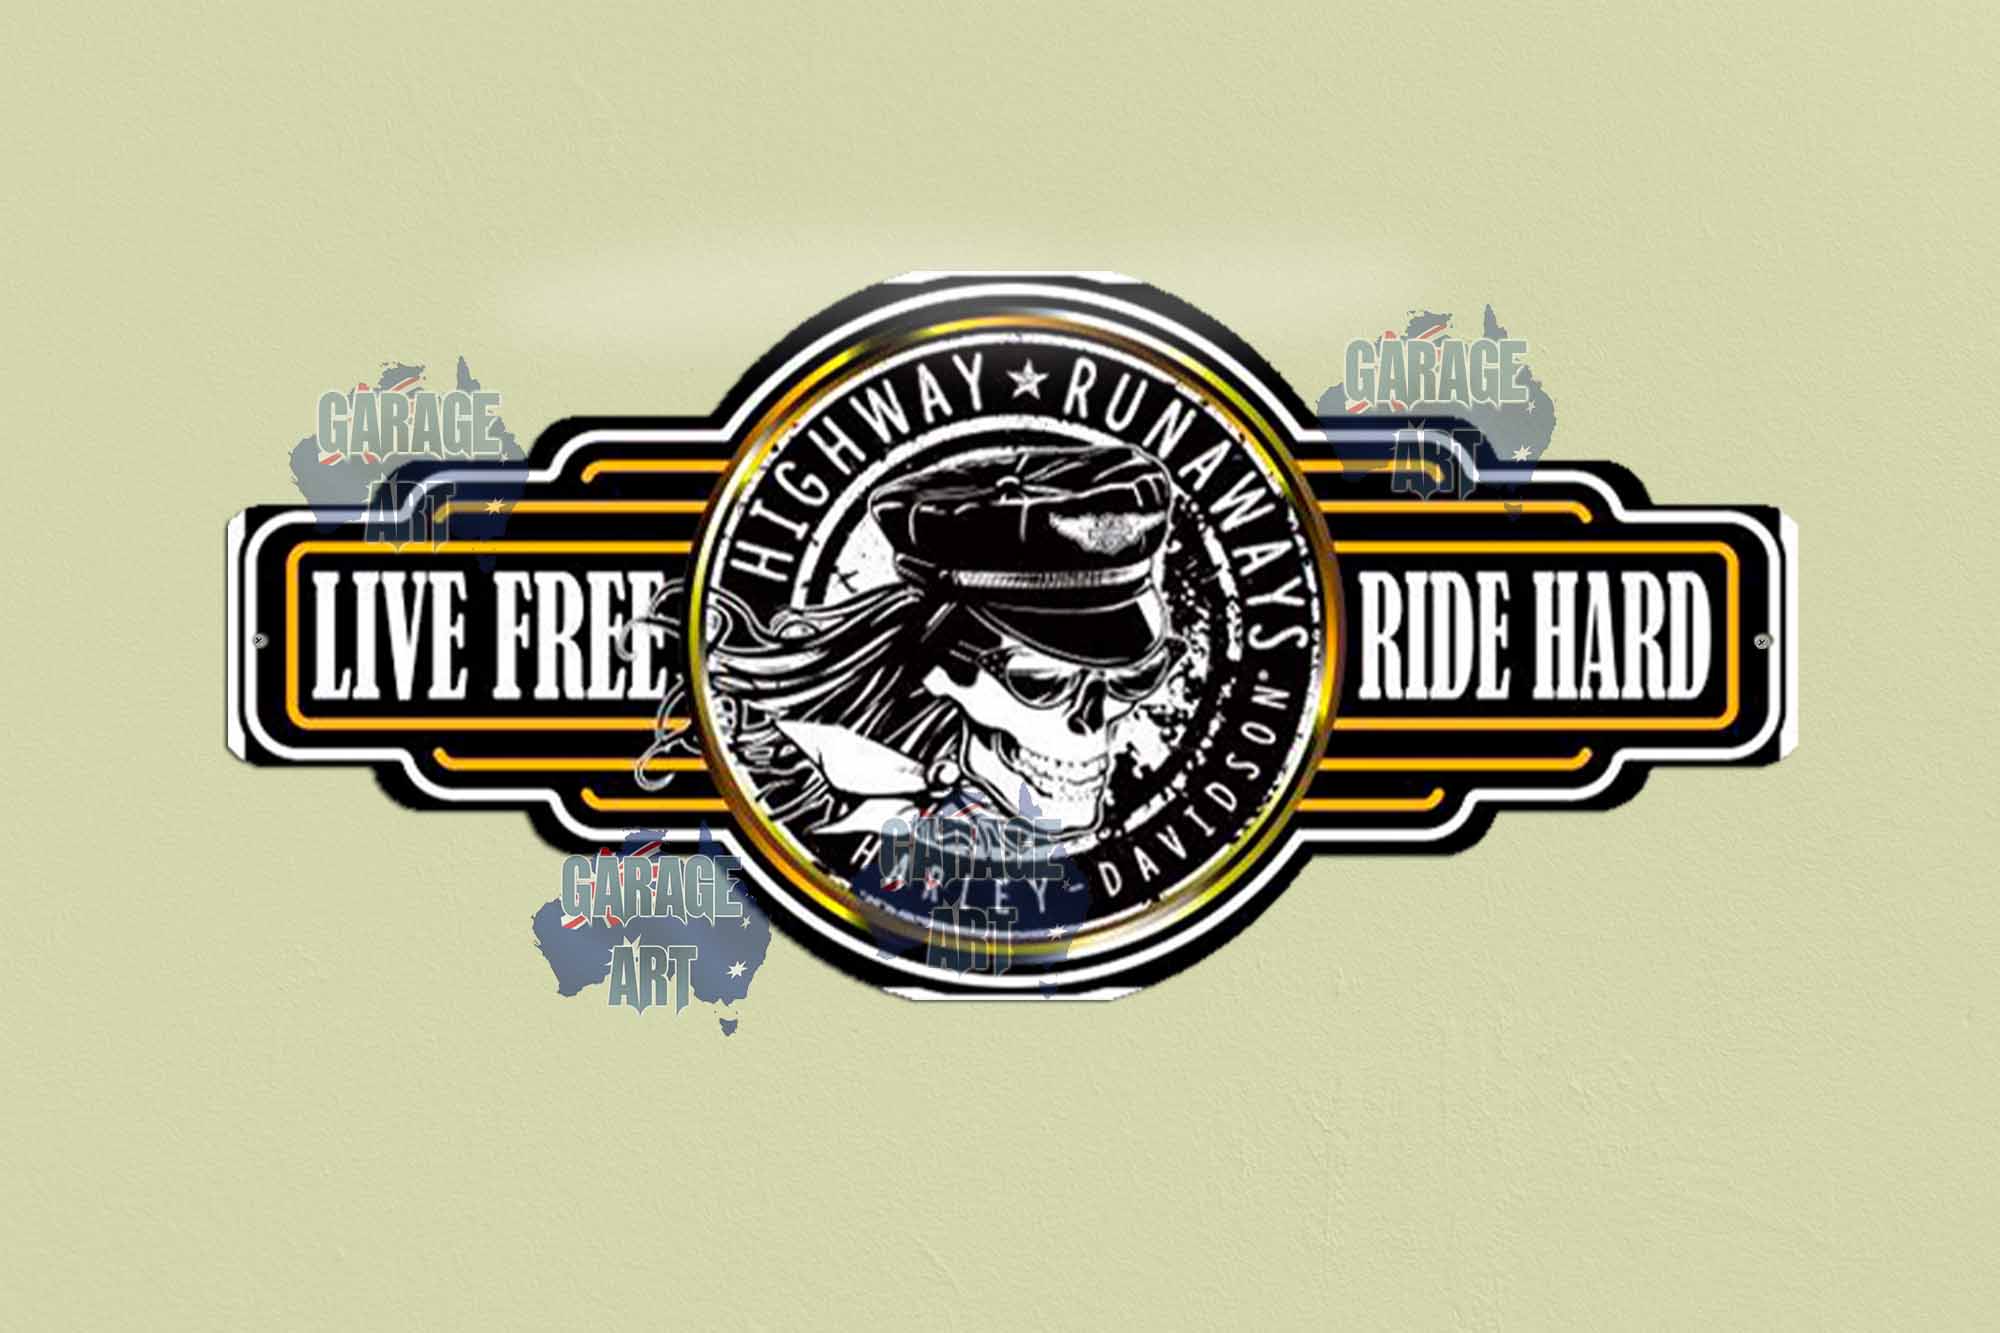 Harley Davidson Highway Runaways Tin Sign freeshipping - garageartaustralia